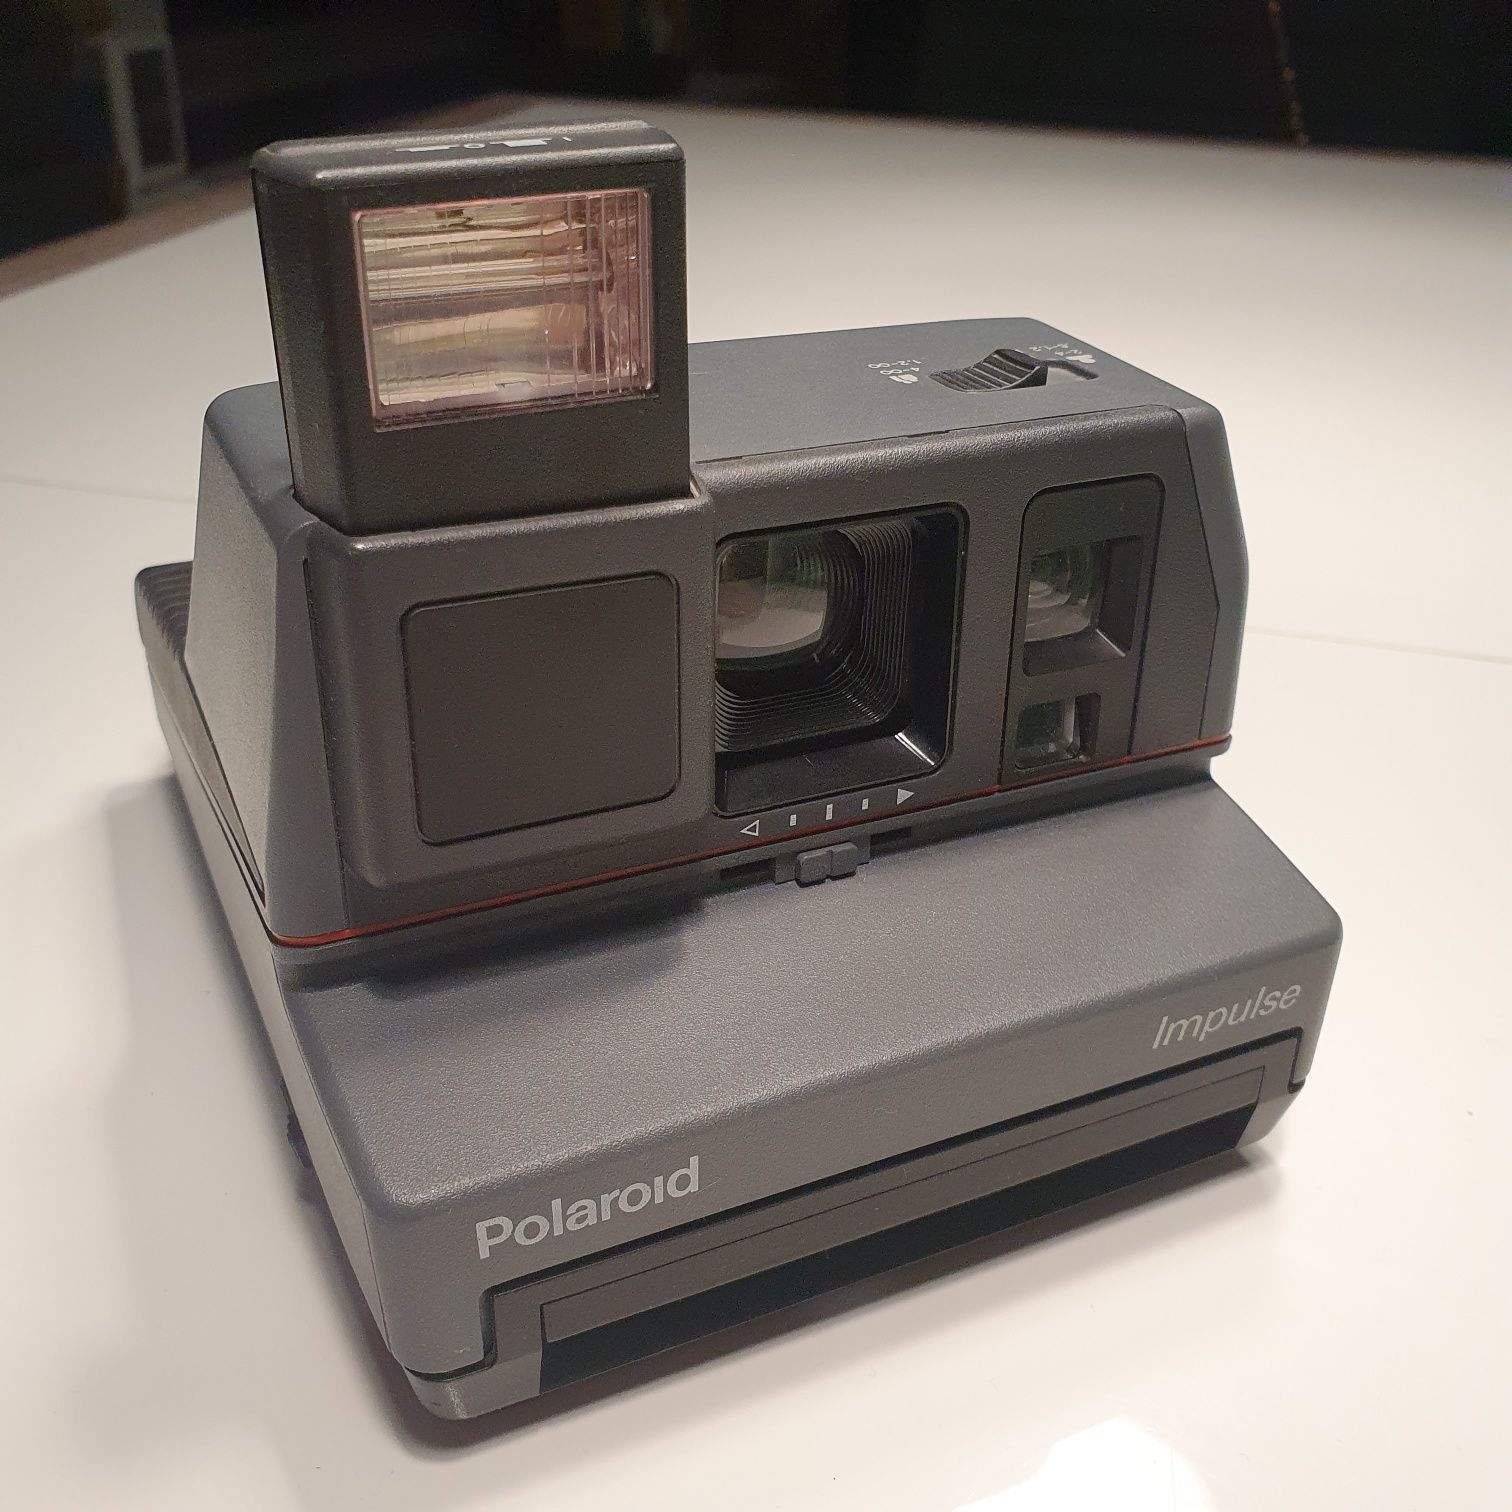 Polaroid impuls nowy stan idealny